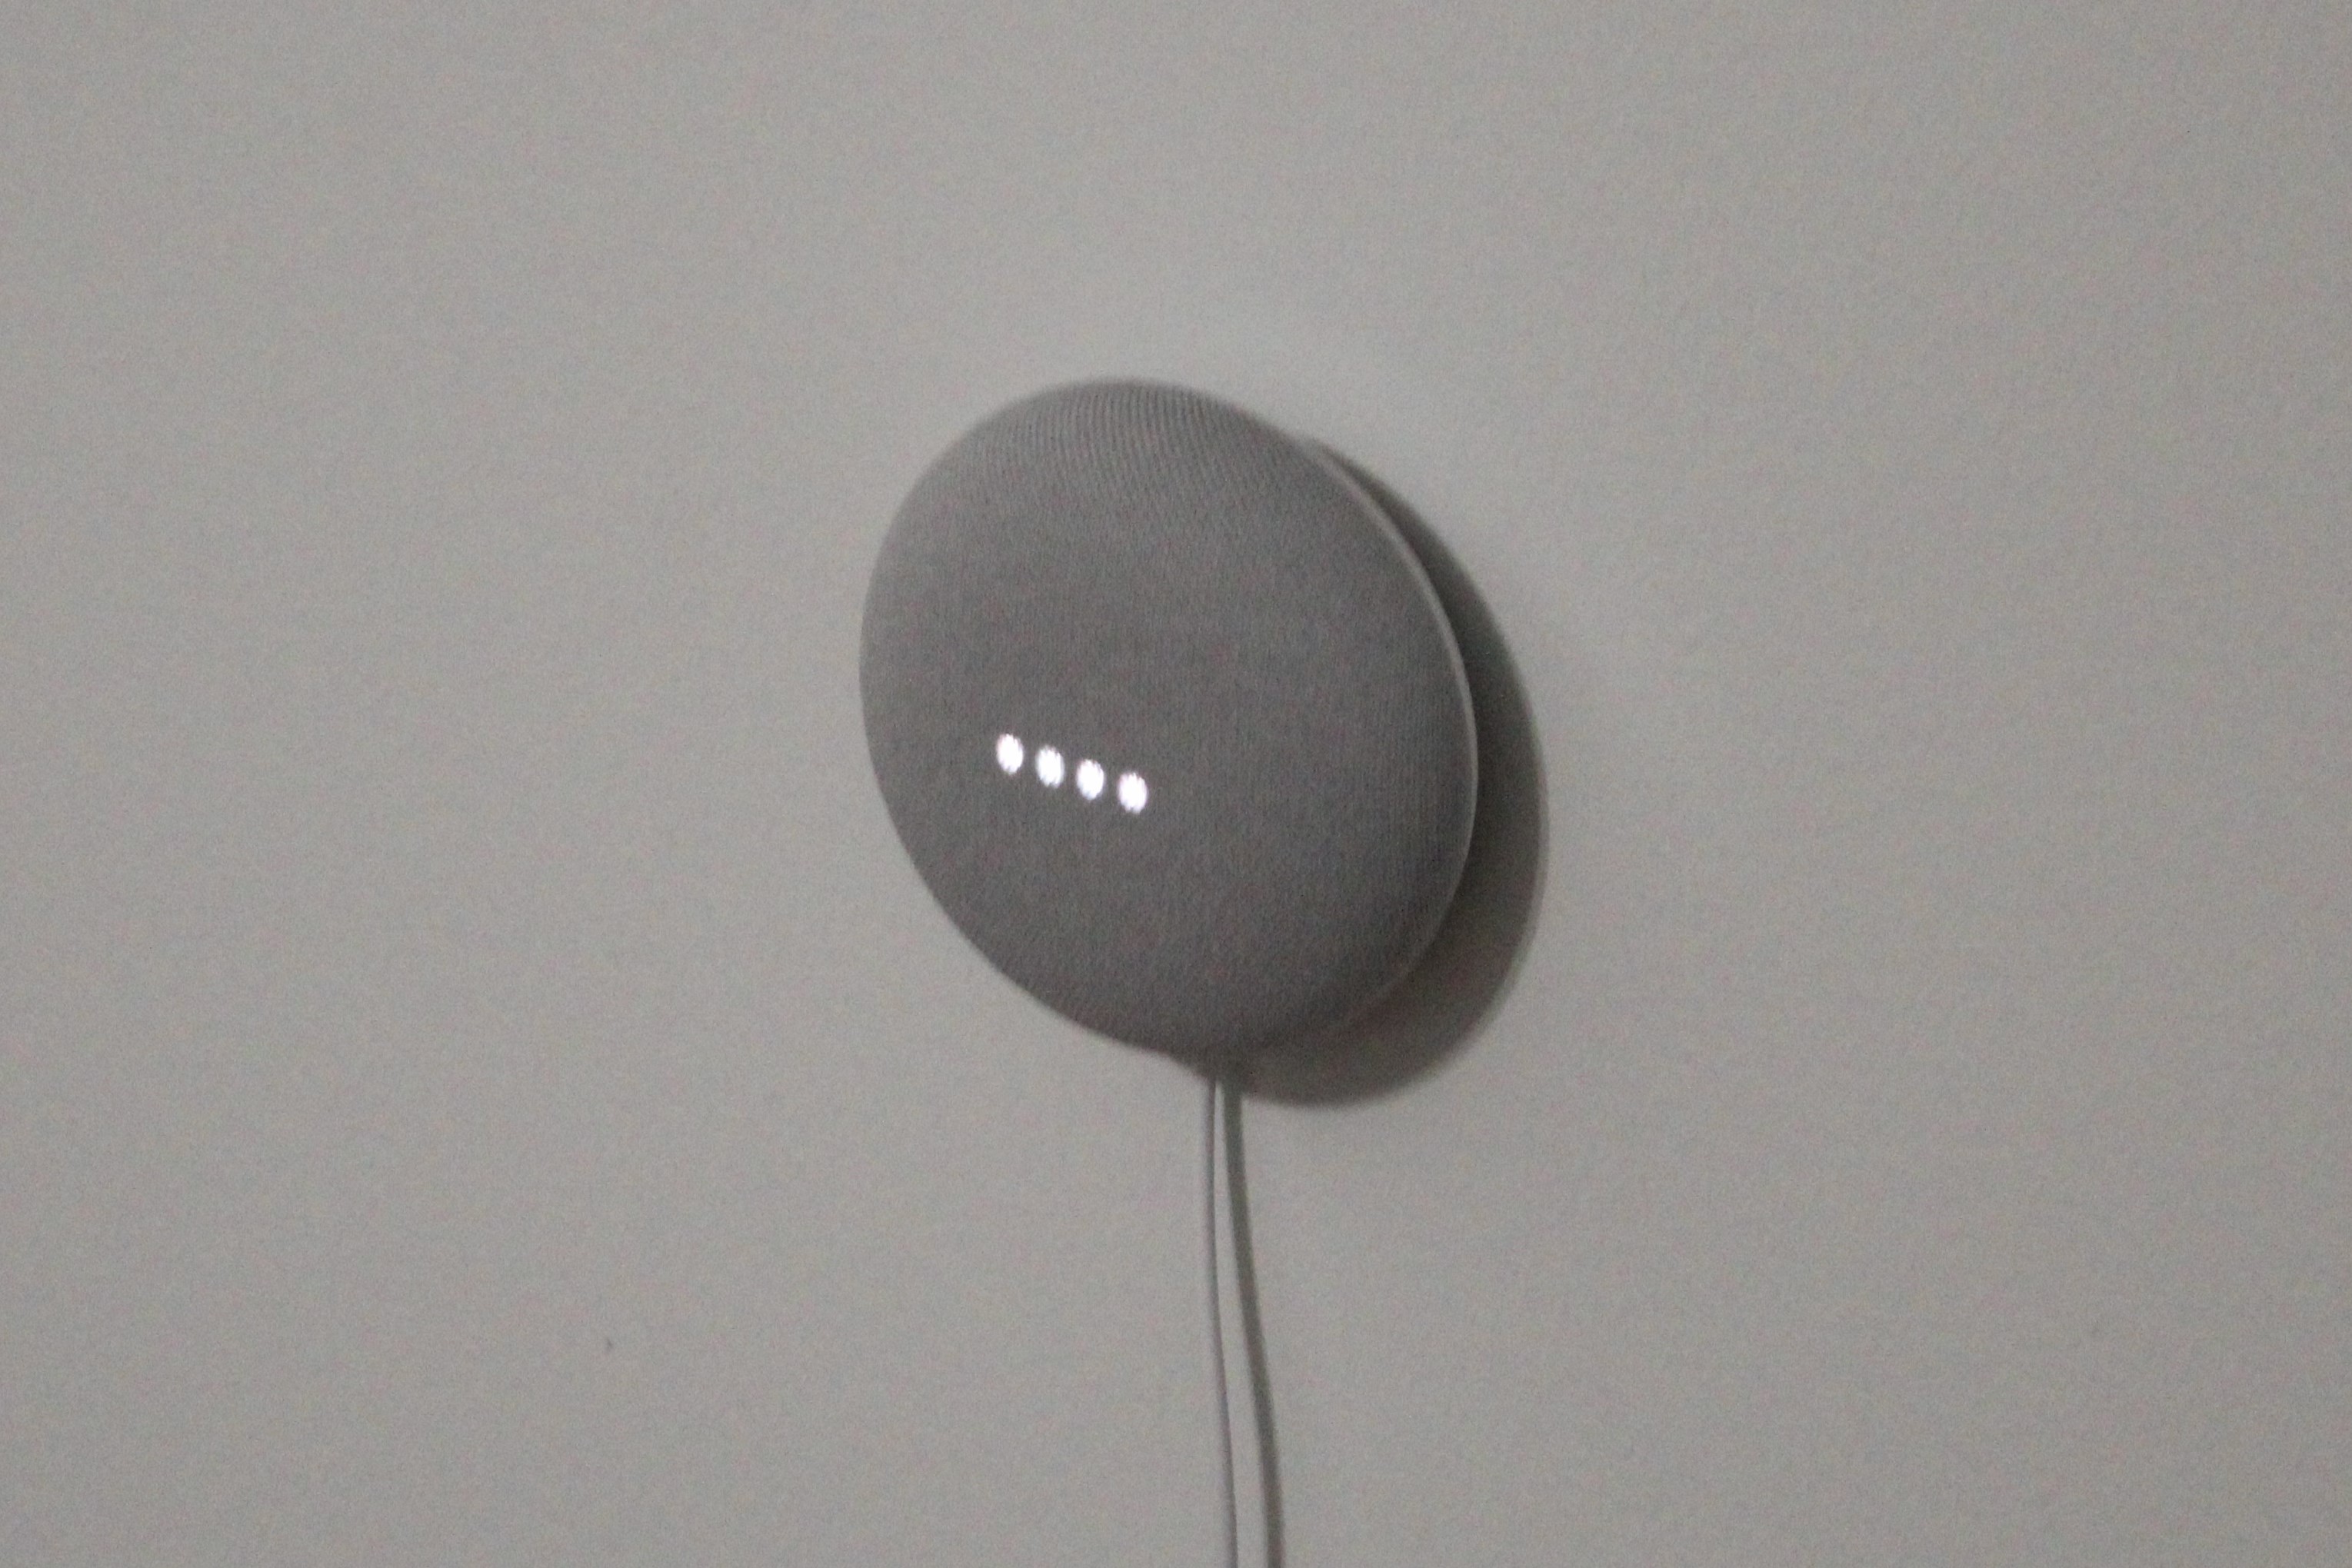 Google Nest Mini on a wall.